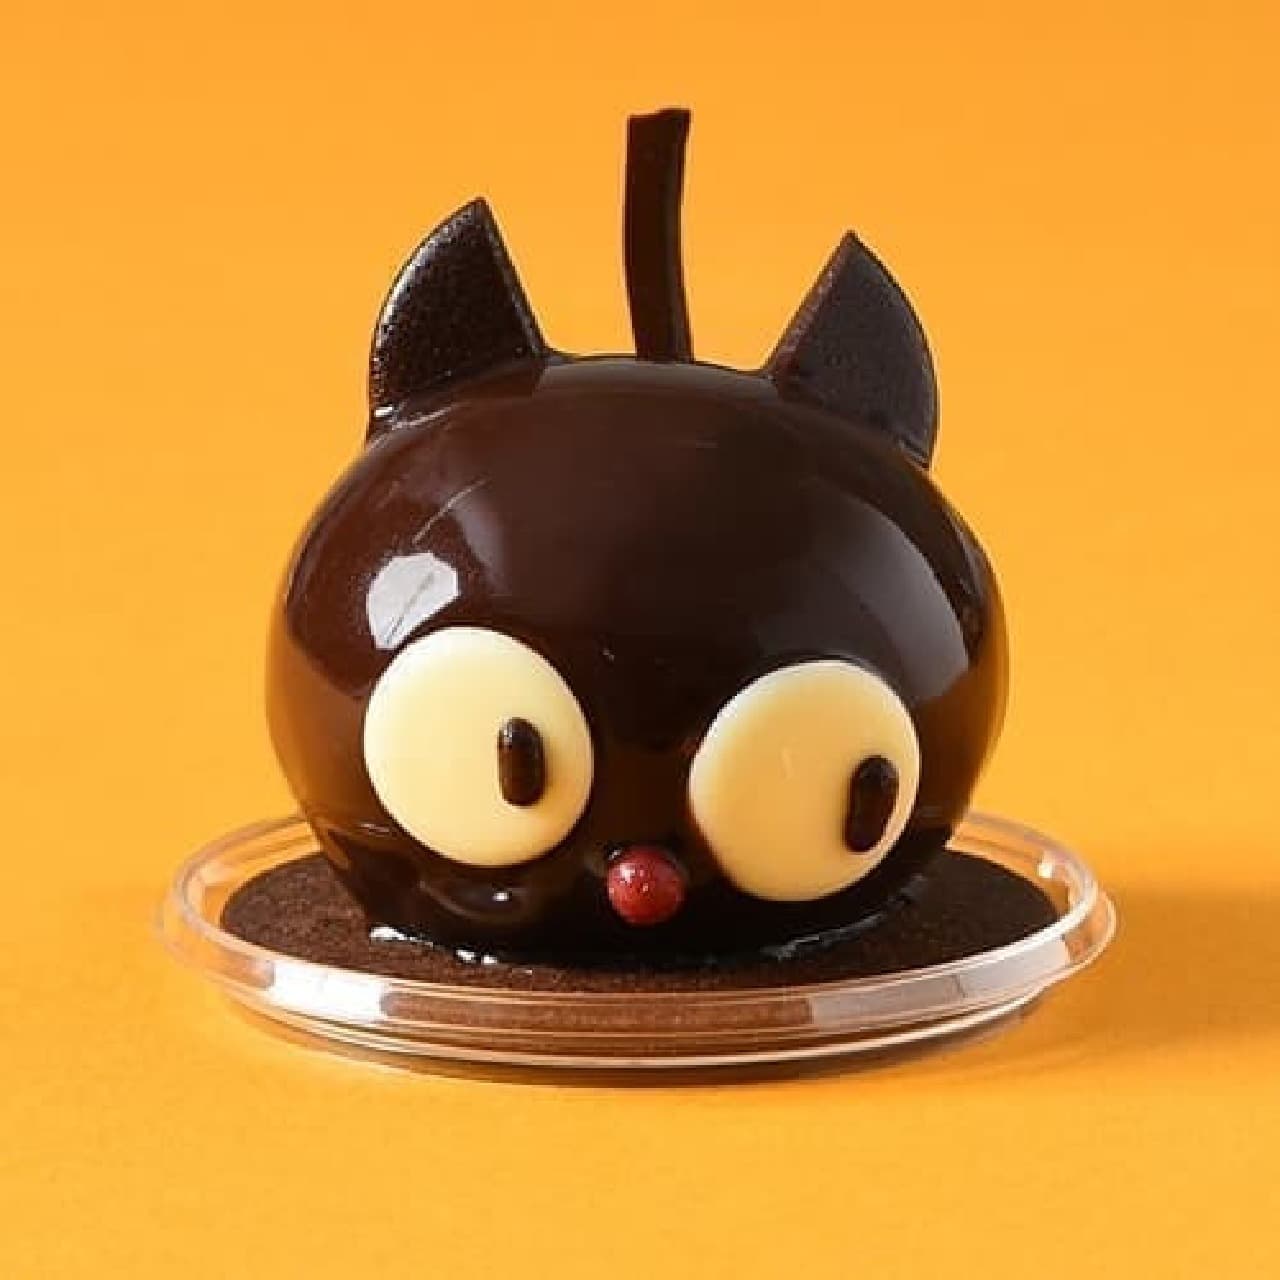 Colombin "Black Cat Cake"